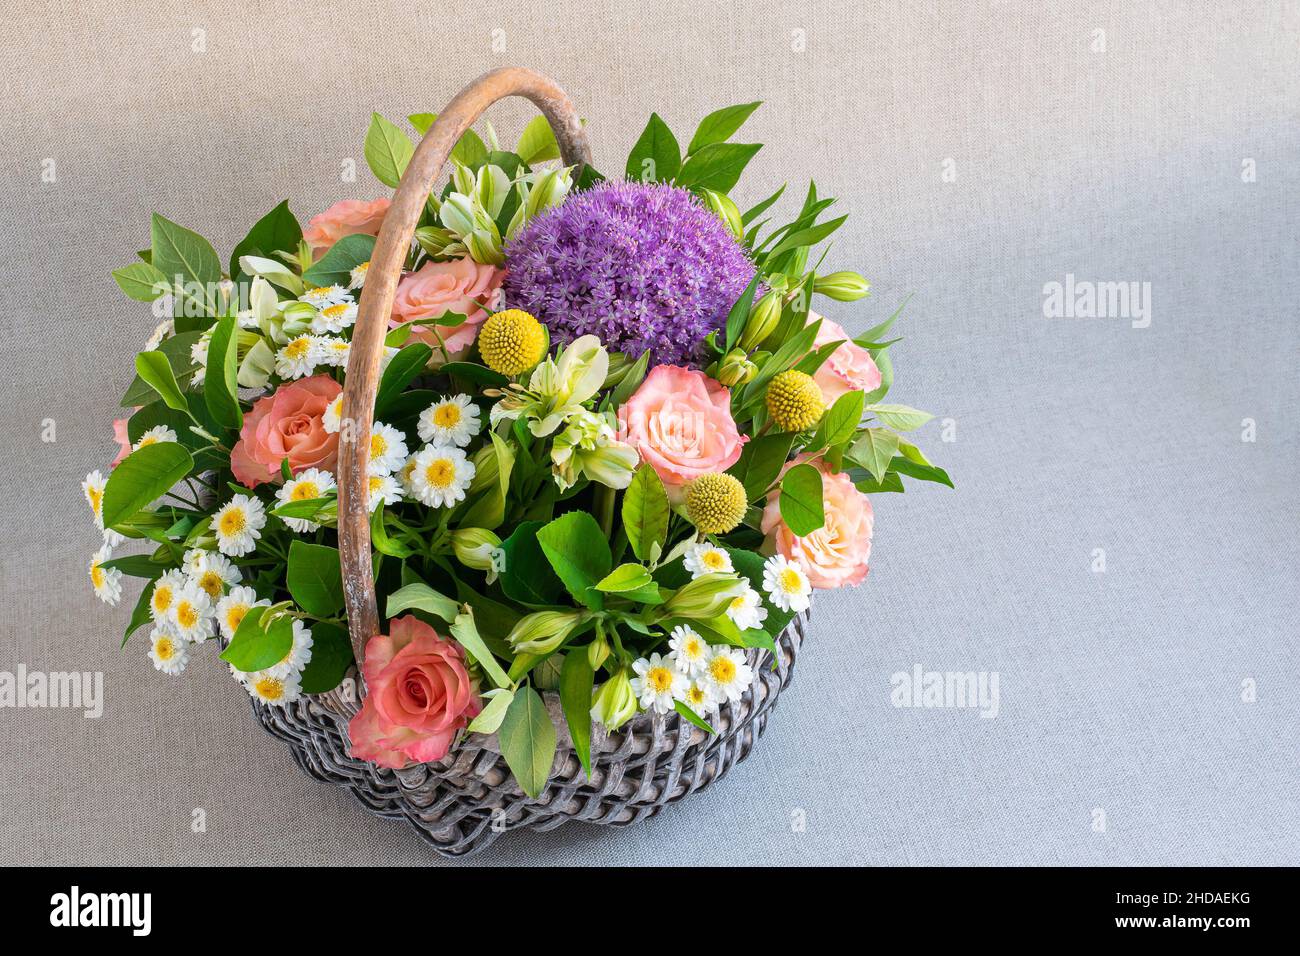 Delicate flowers in a wicker basket on light background Stock Photo